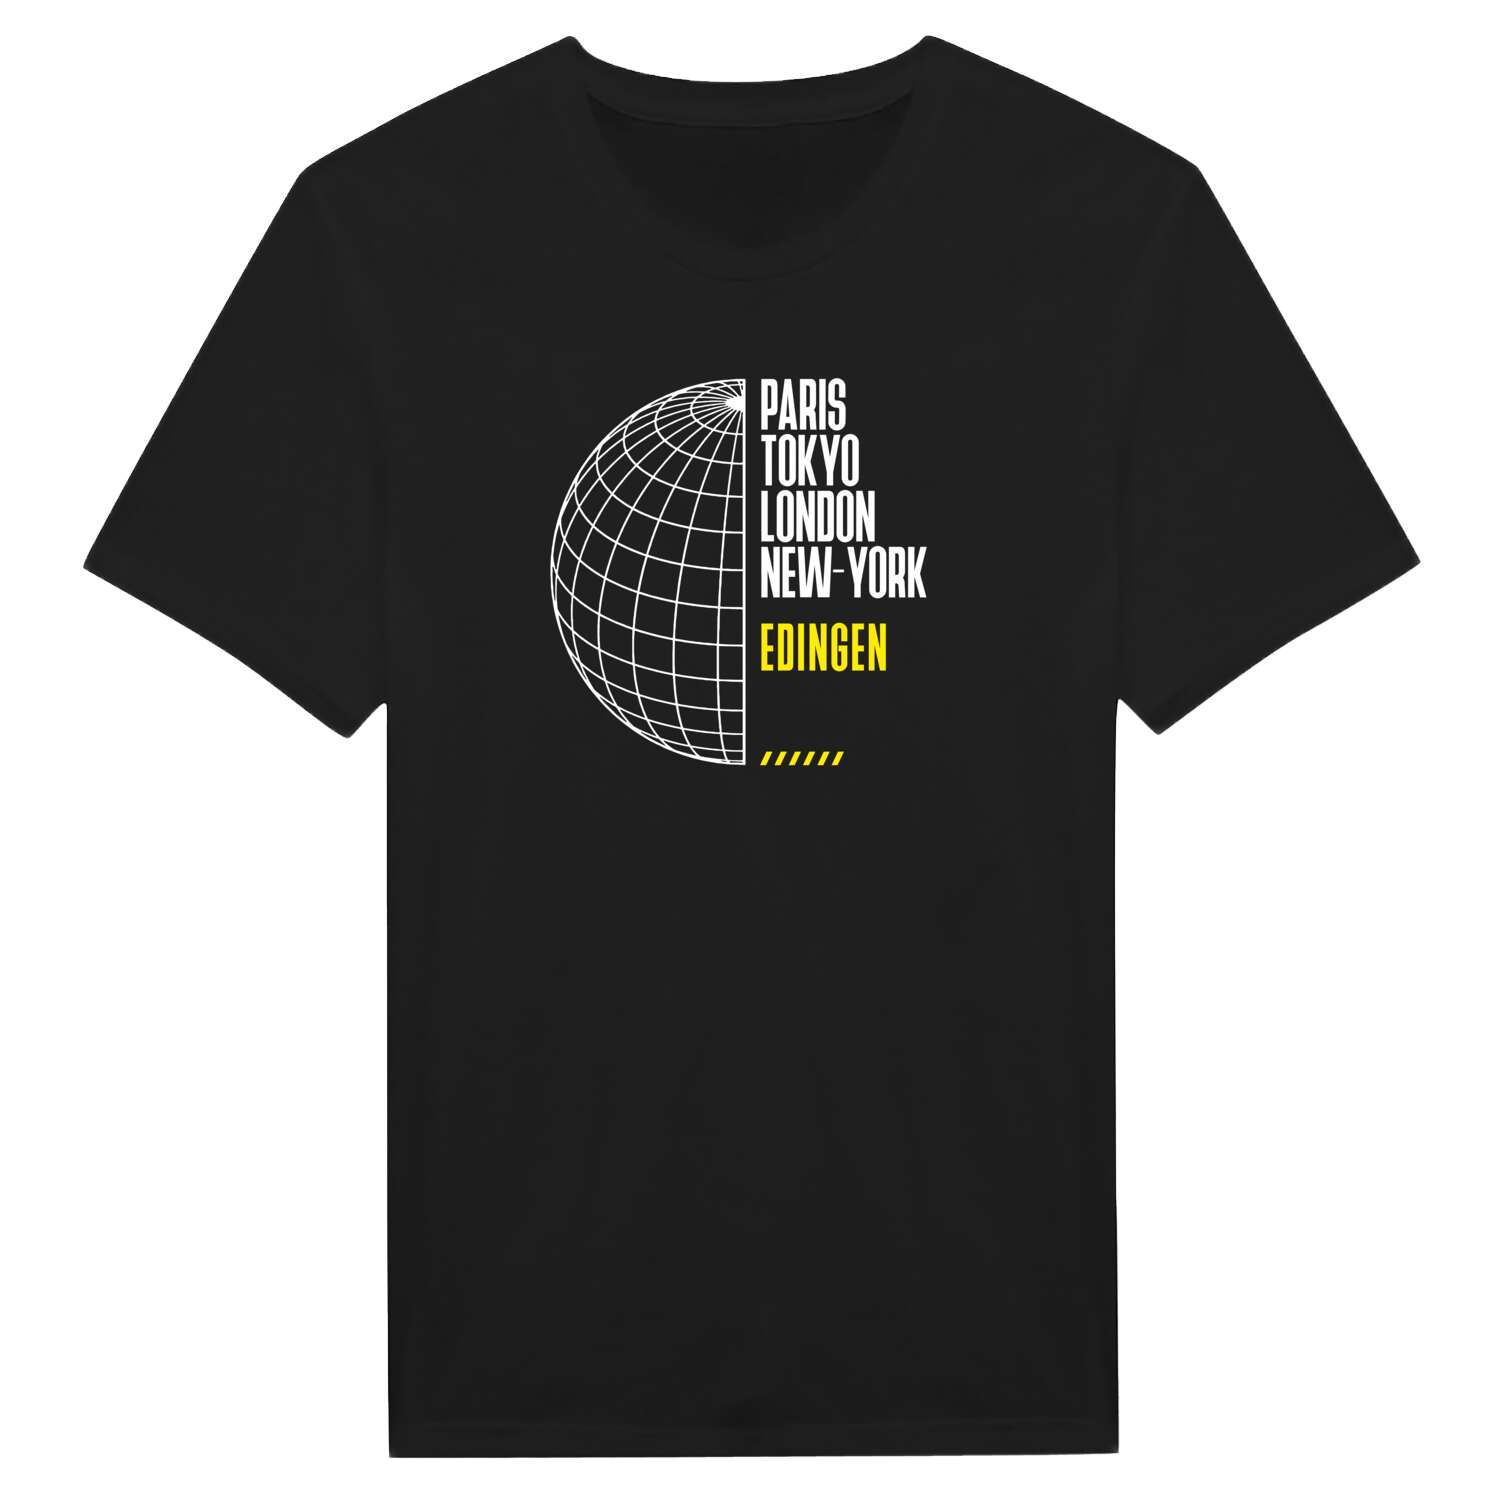 Edingen T-Shirt »Paris Tokyo London«